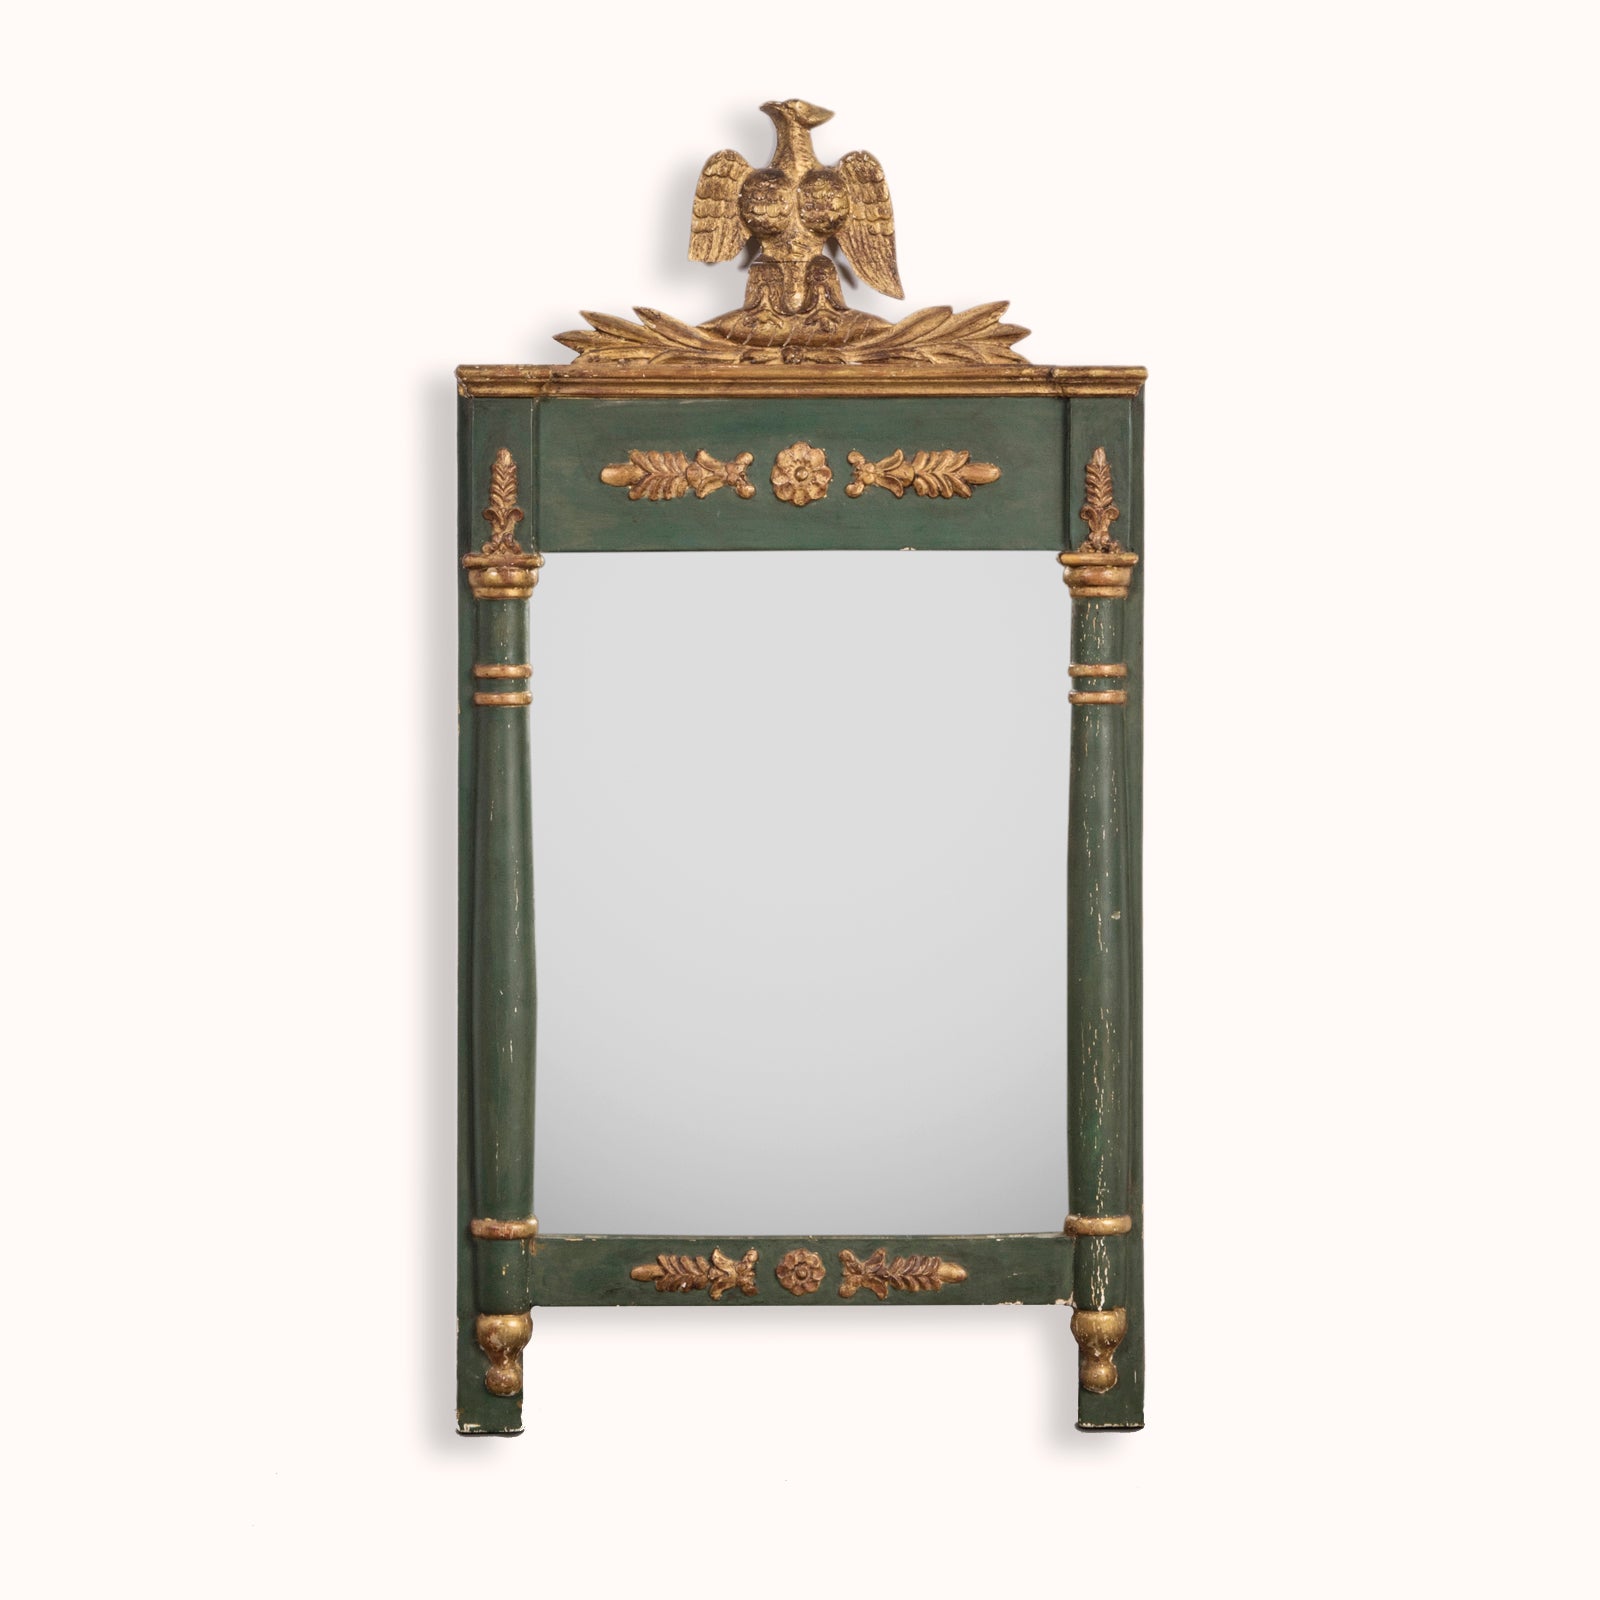 19th French Empire C Golden Eagle Crest Mirror